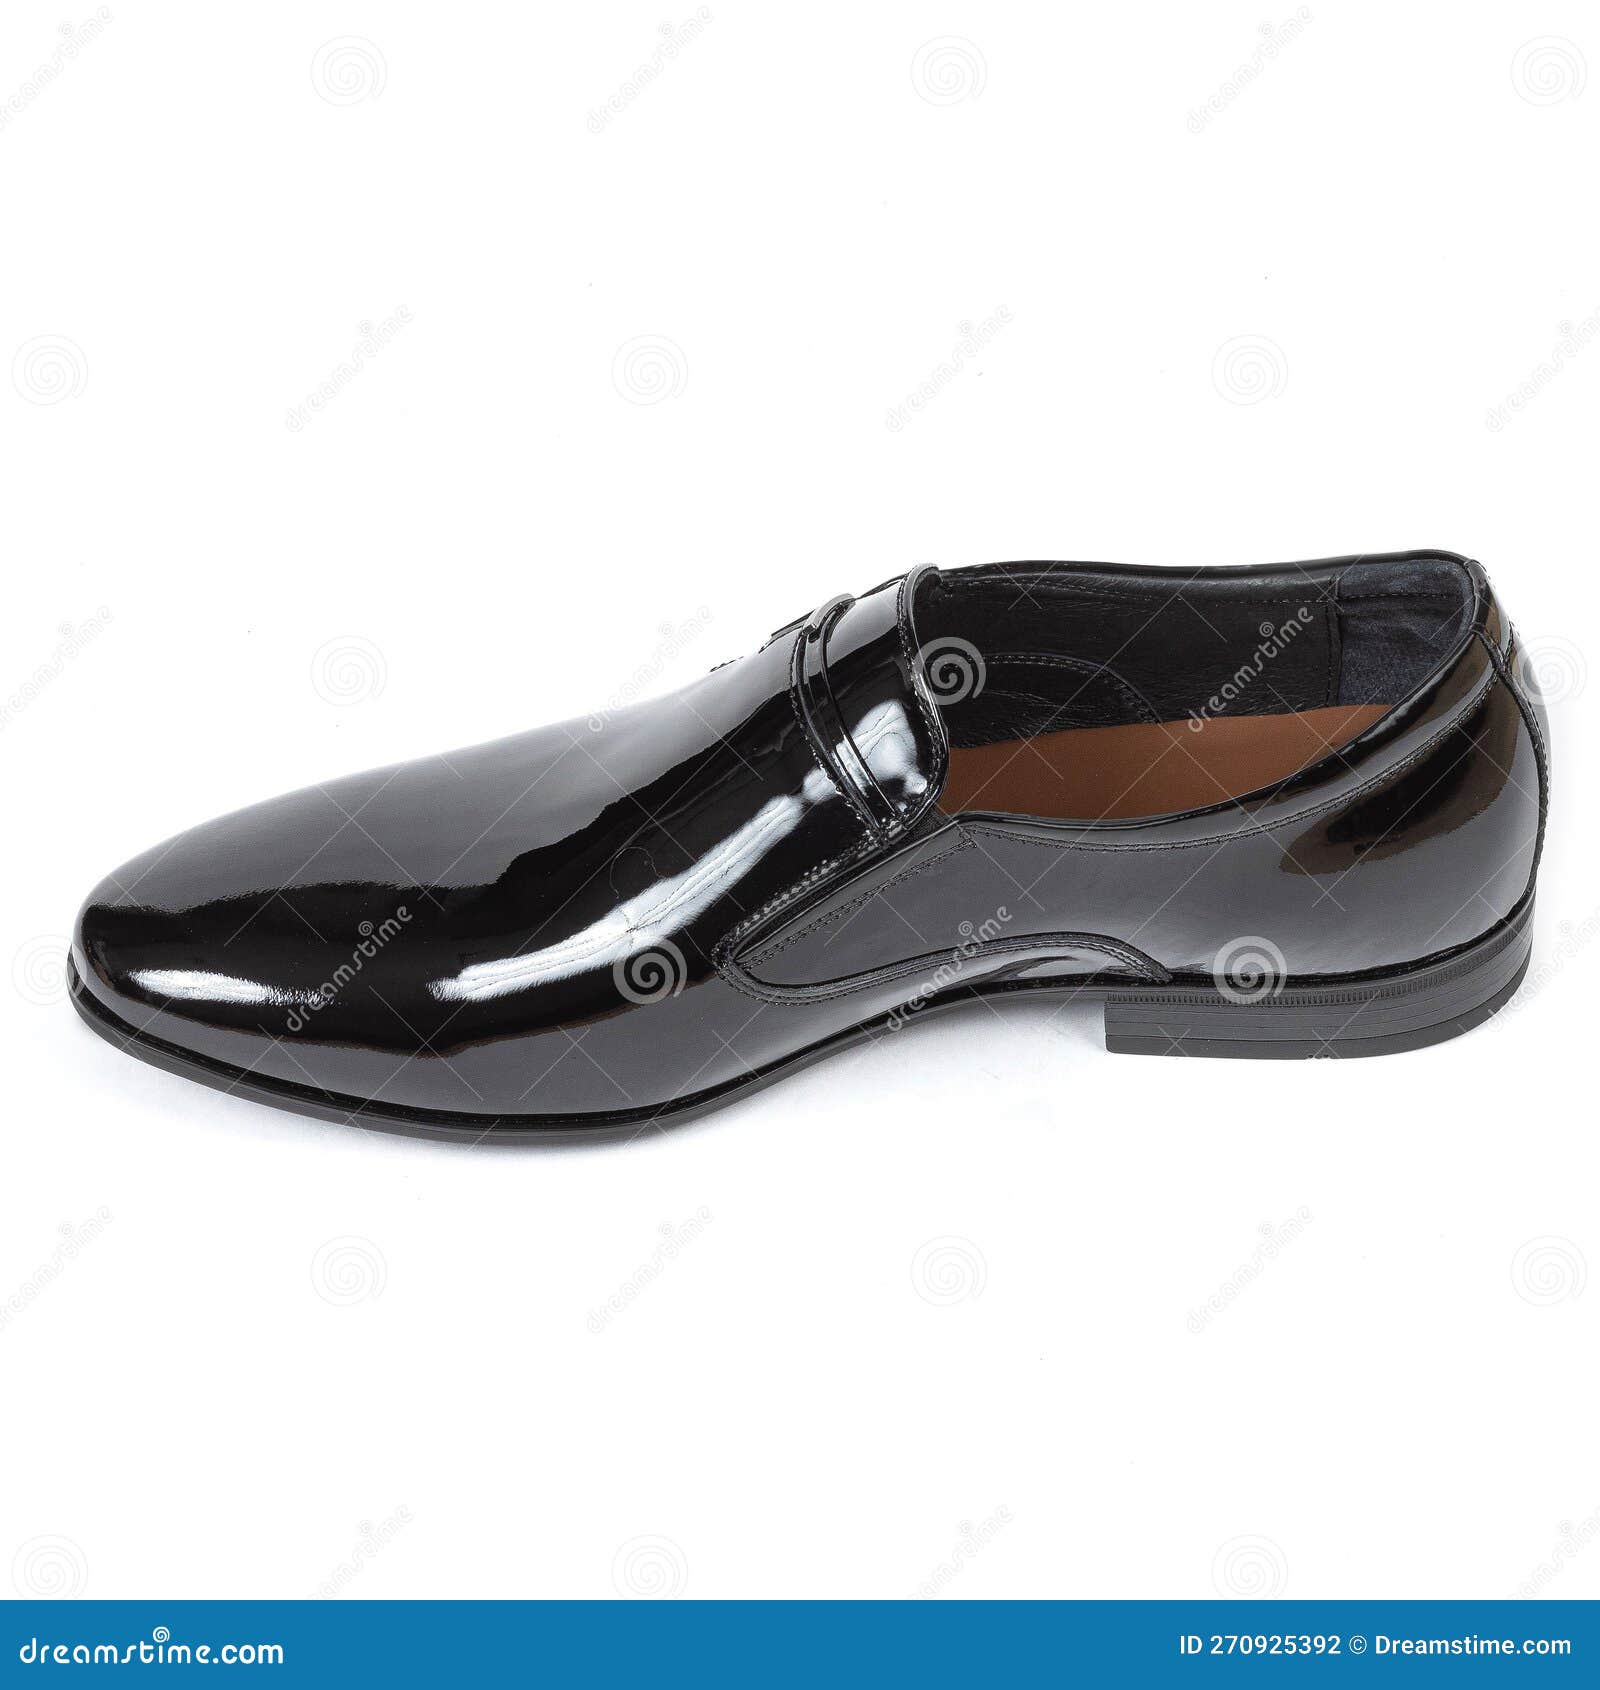 Khadim Black Leather Pump Heels Formal Shoe for Women